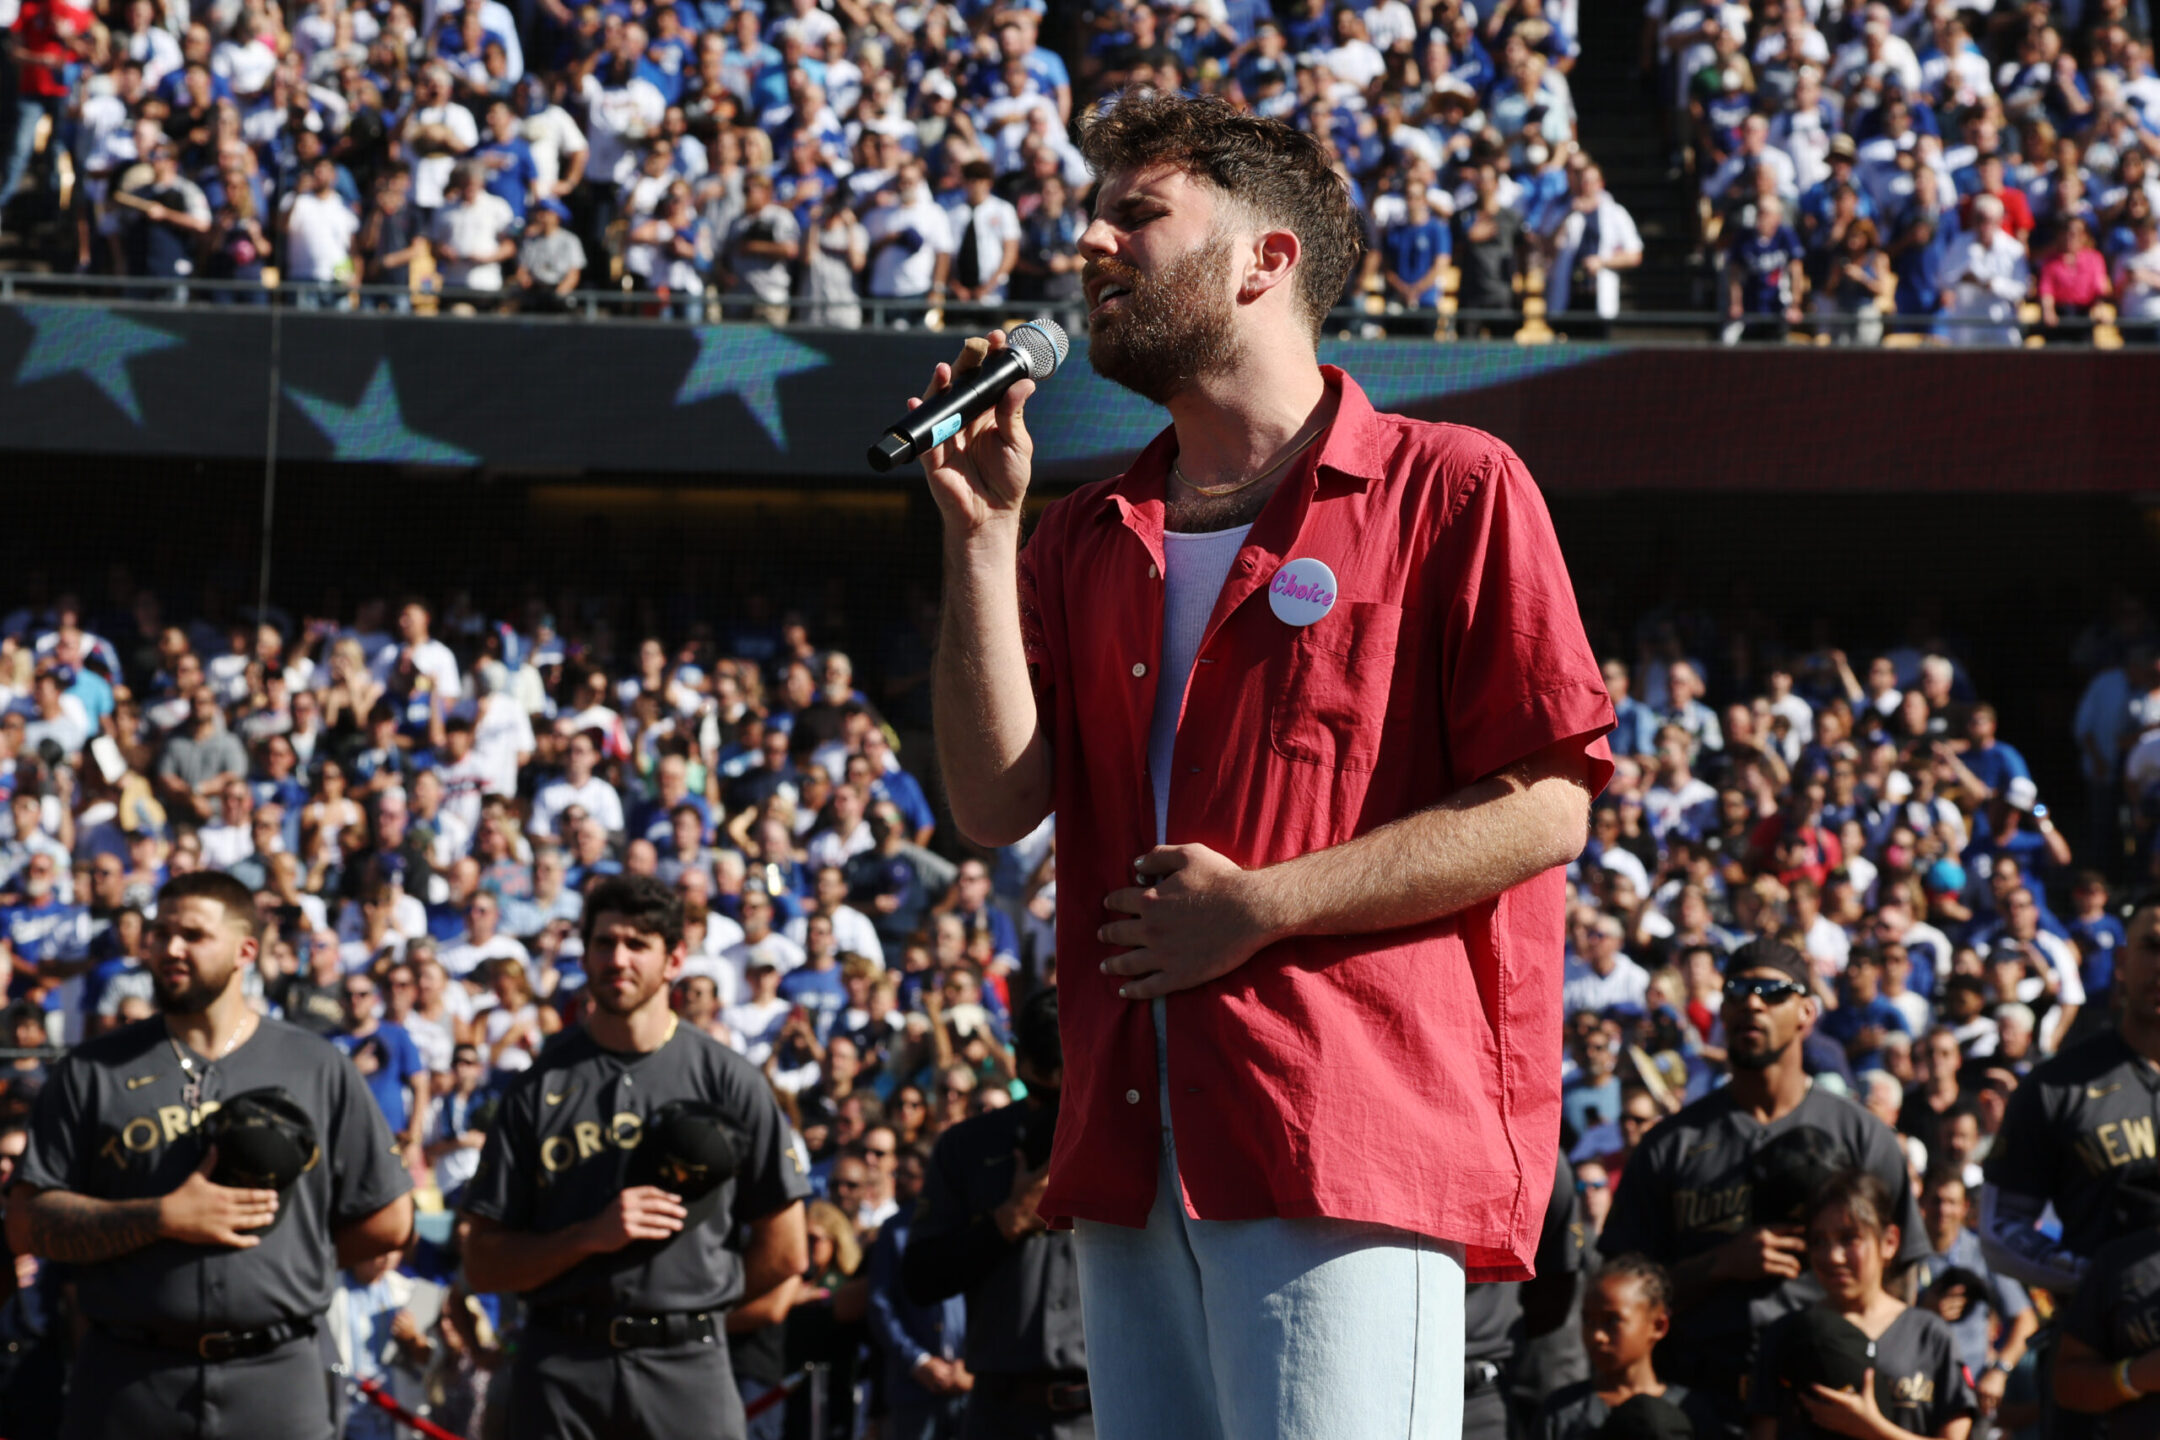 Jewish Broadway star Ben Platt performs national anthem at baseball's All-Star game